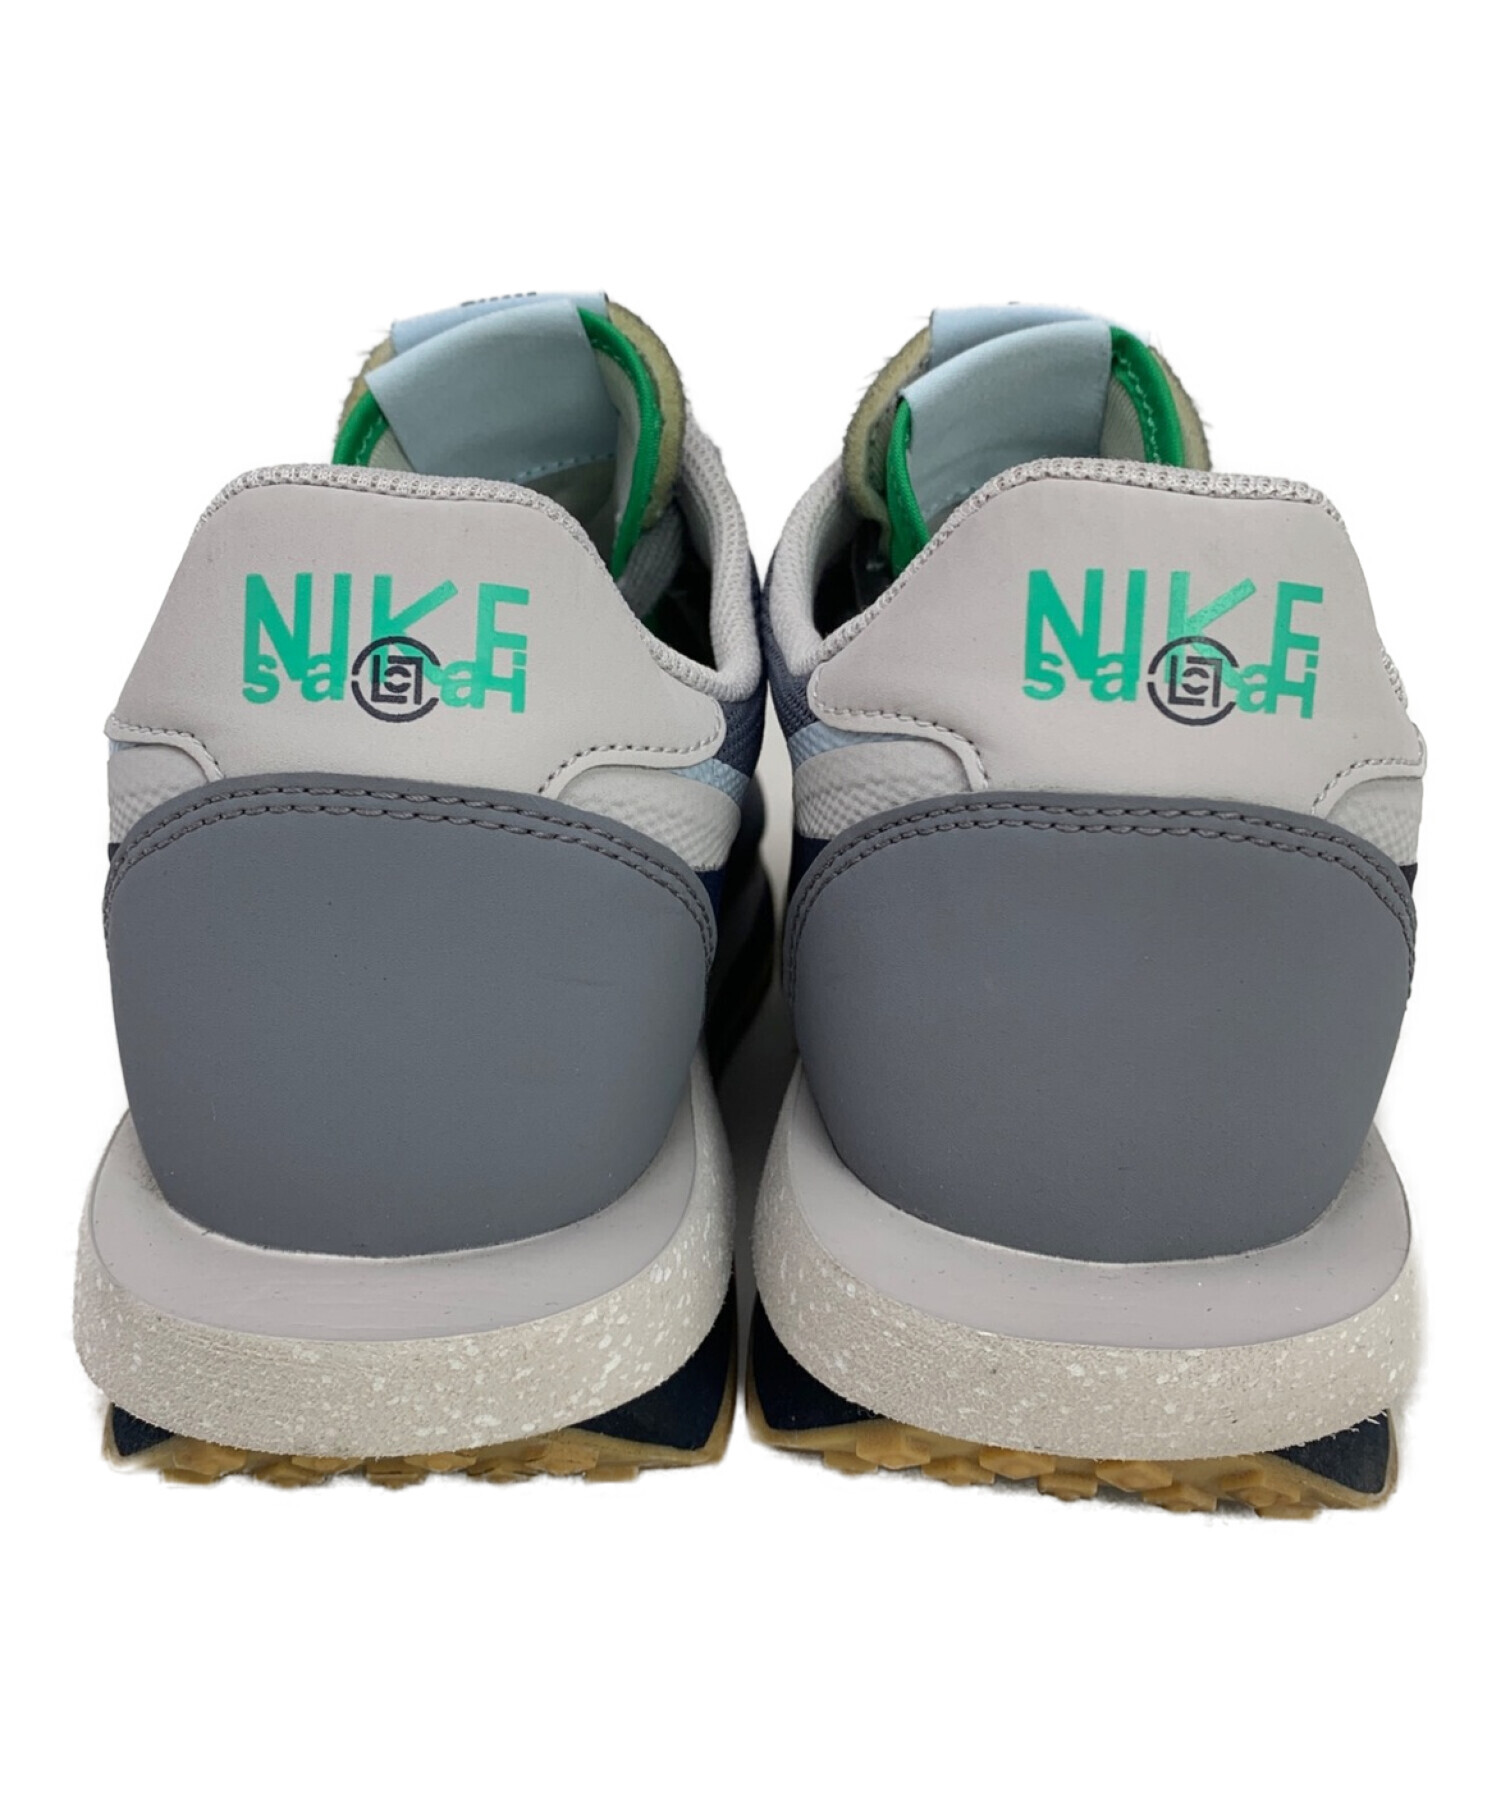 NIKE (ナイキ) sacai (サカイ) CLOT (クロット) Nike LD Waffle x Sacai x CLOT グレー サイズ:28